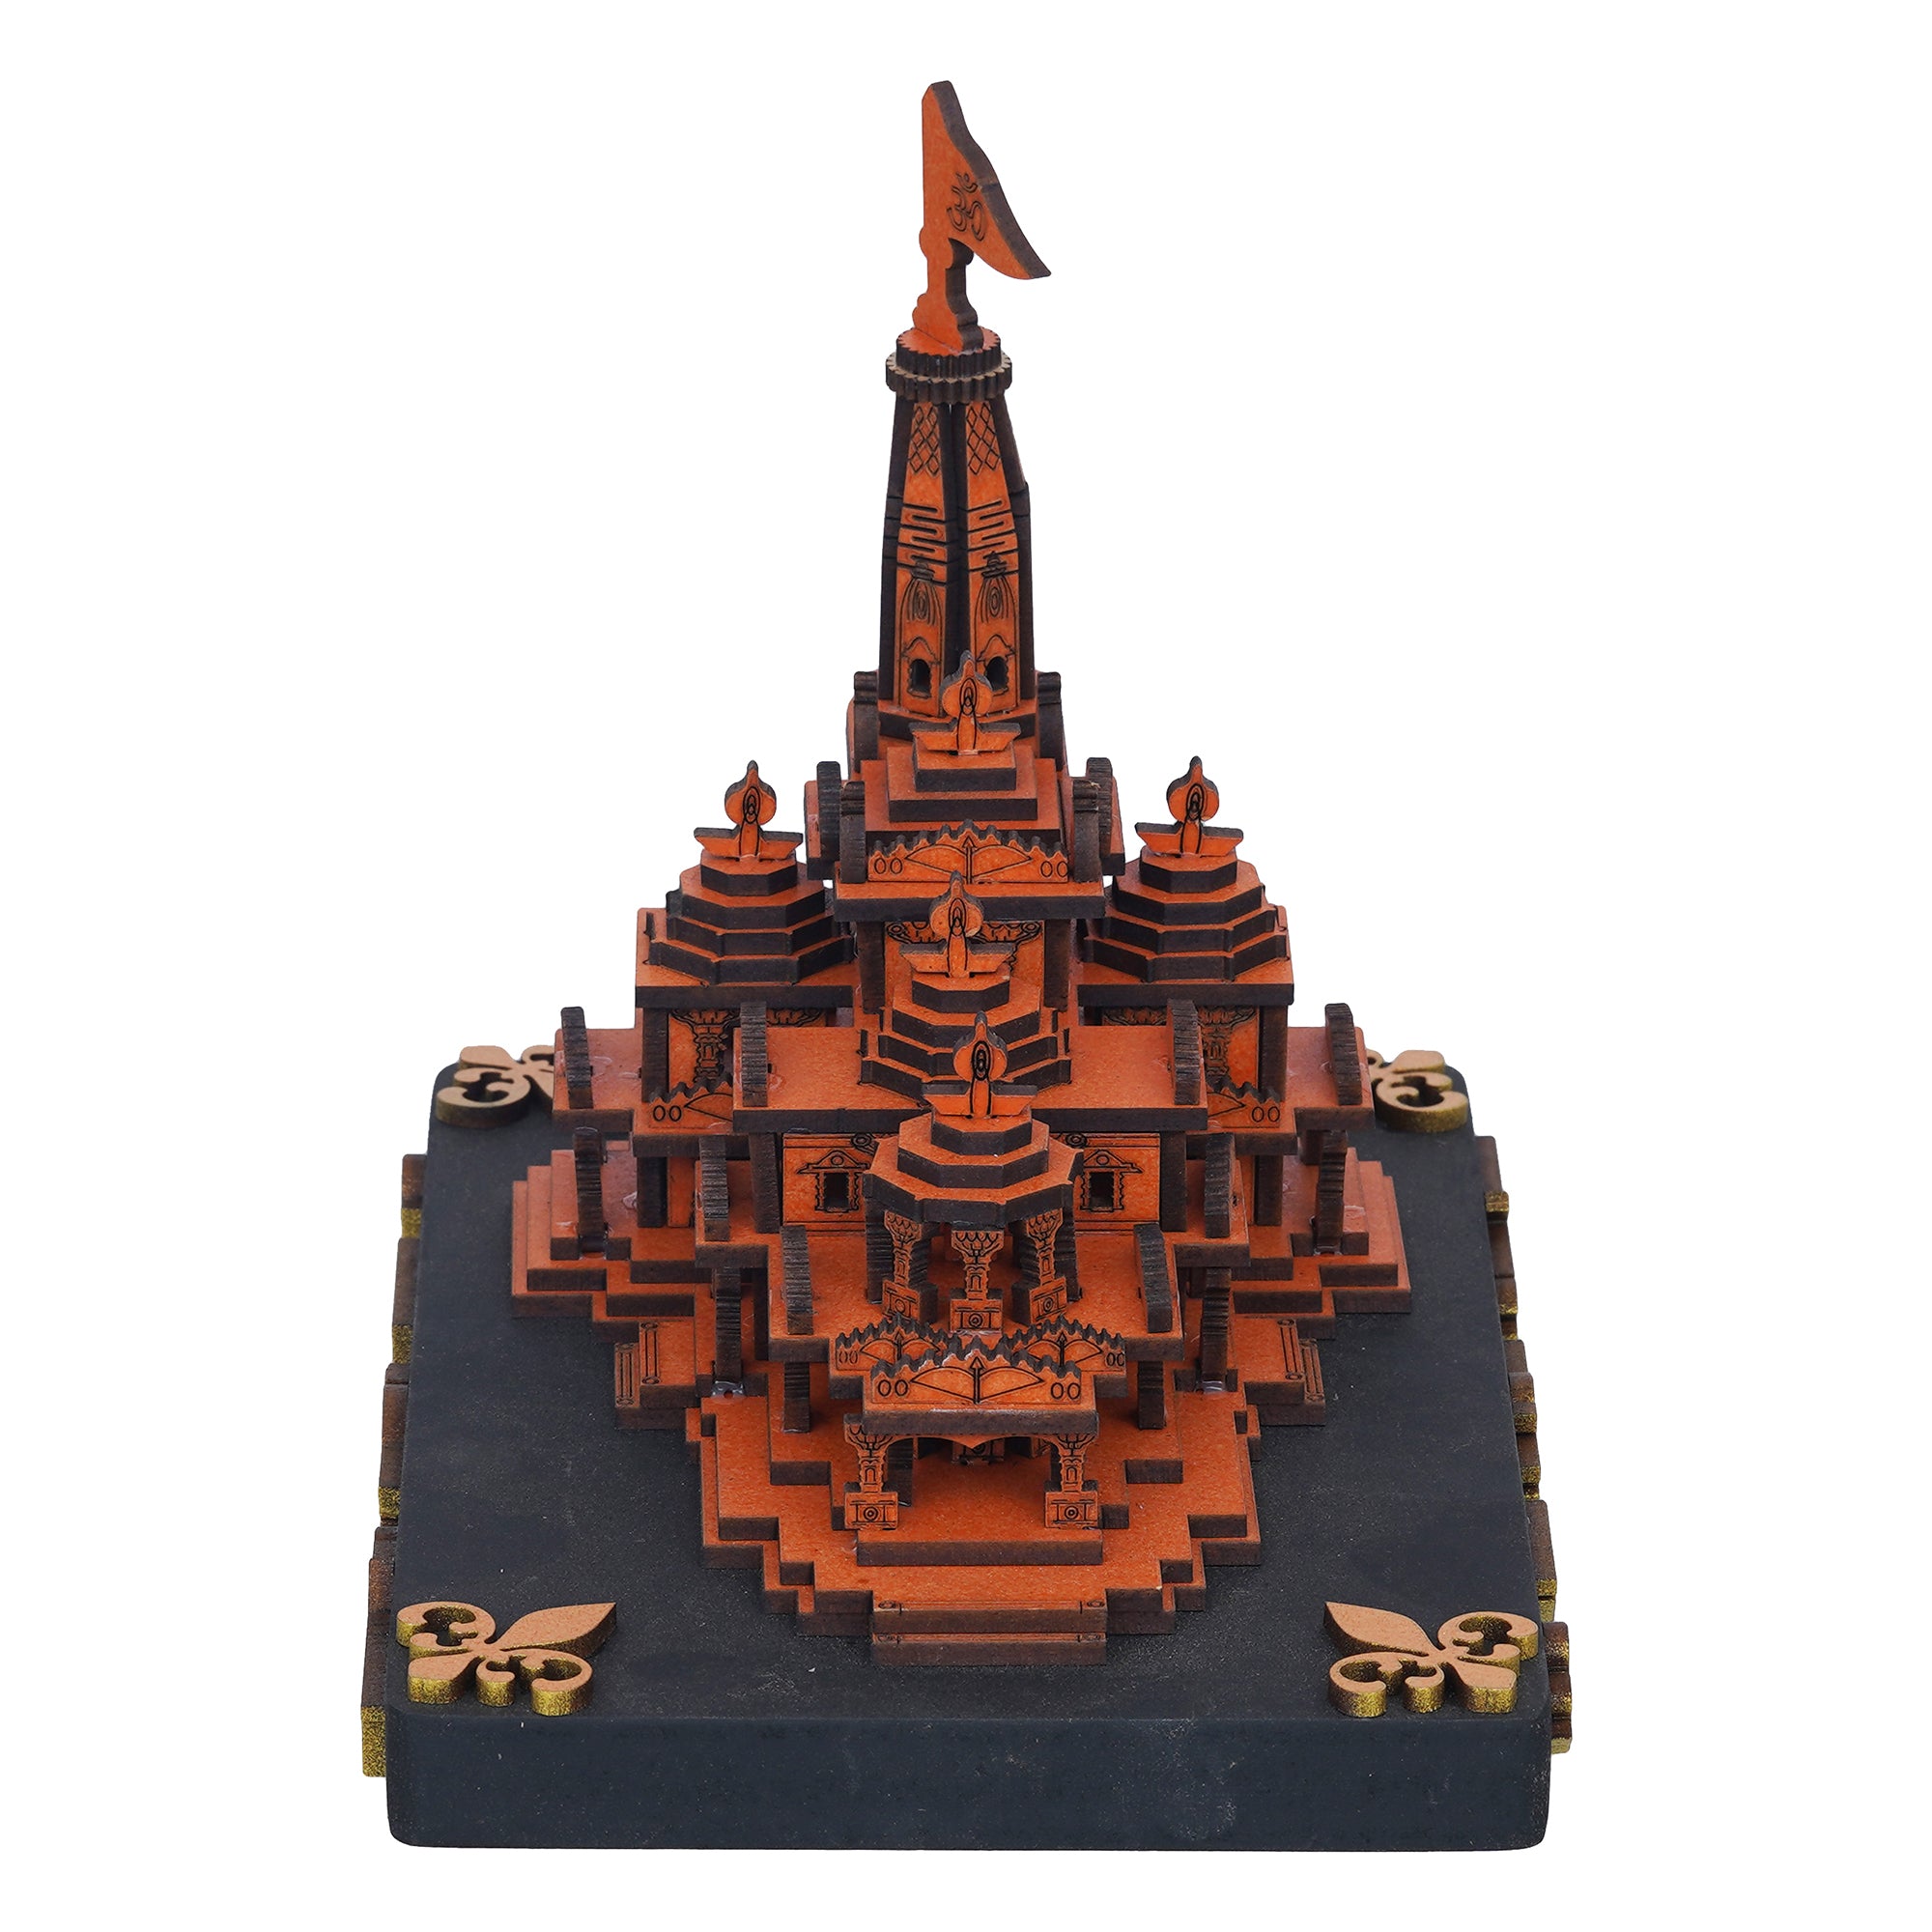 eCraftIndia Shri Ram Mandir Ayodhya Model - Wooden MDF Craftsmanship Authentic Designer Temple - Ideal for Home Temple, Decor, and Spiritual Gifting (Orange, Gold) 7